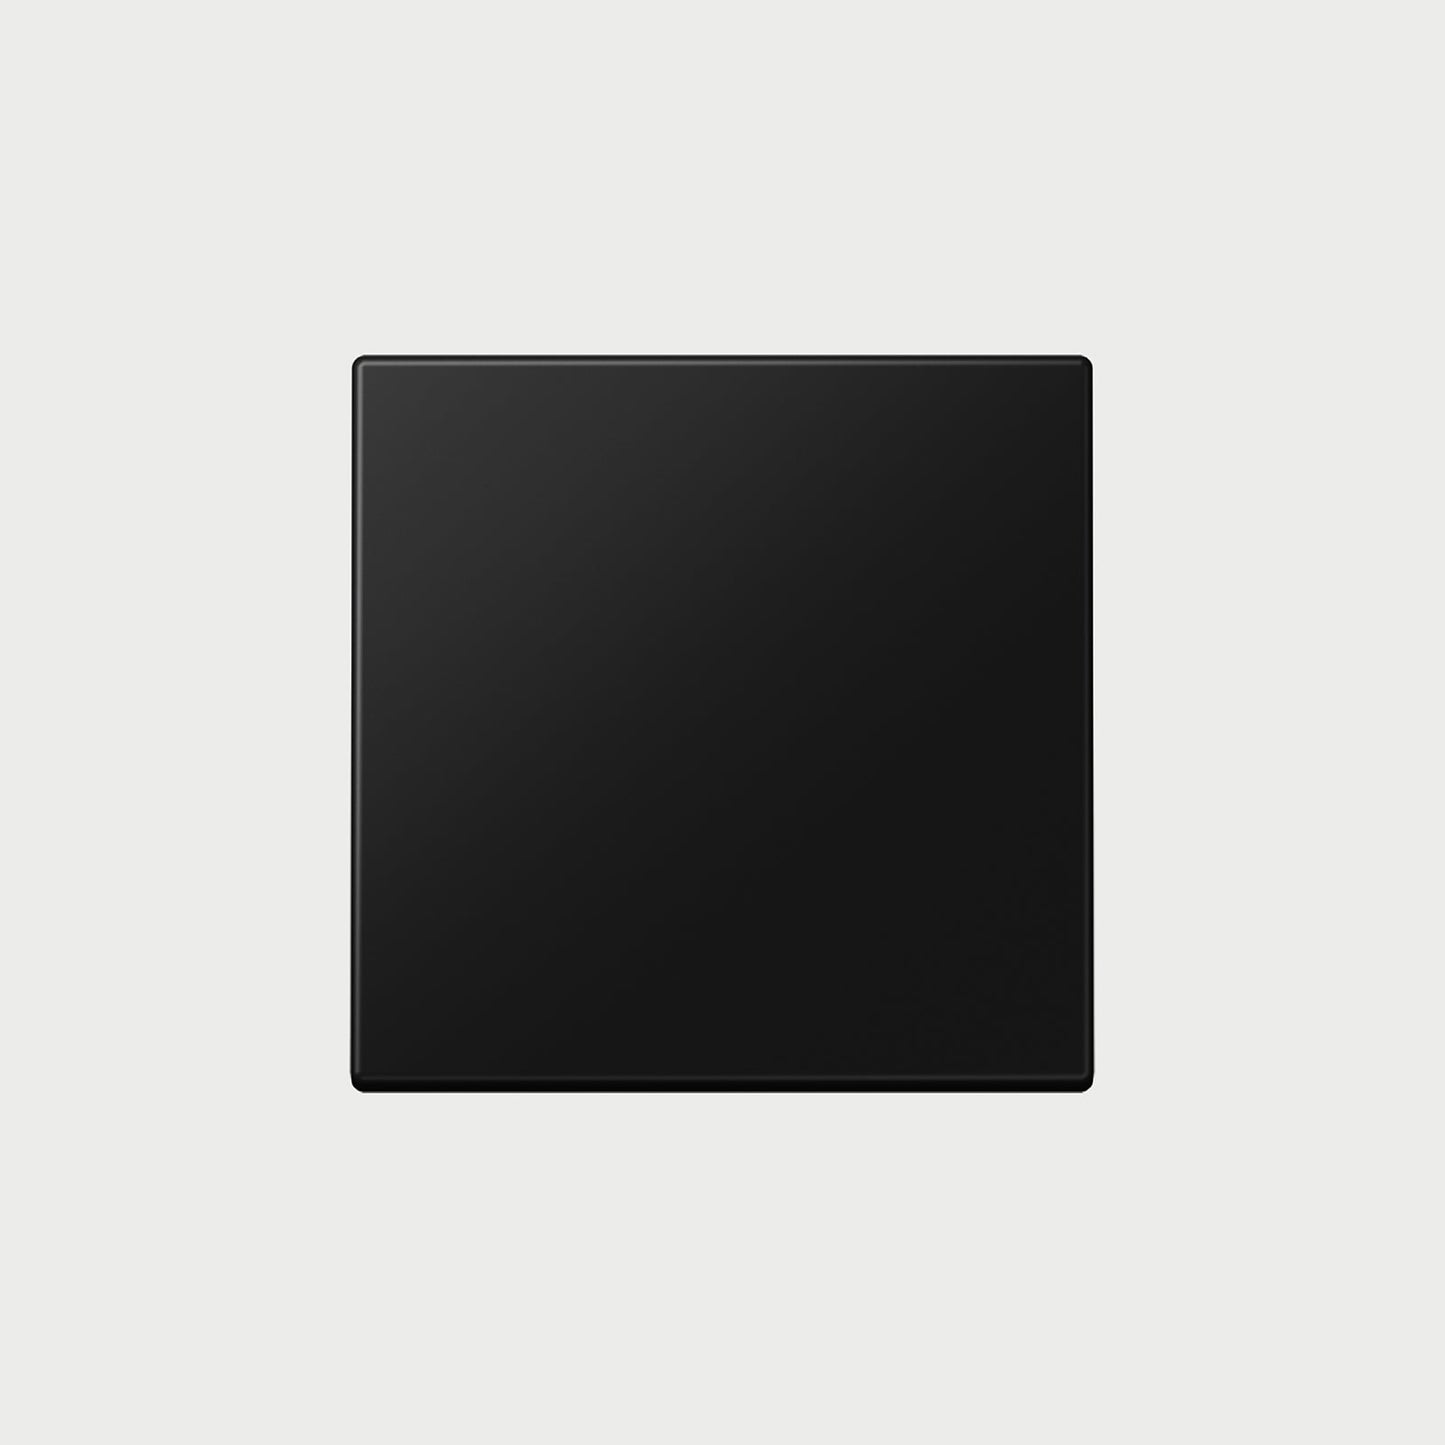 Ls990 (Plastic) Matt Graphite Black Cover